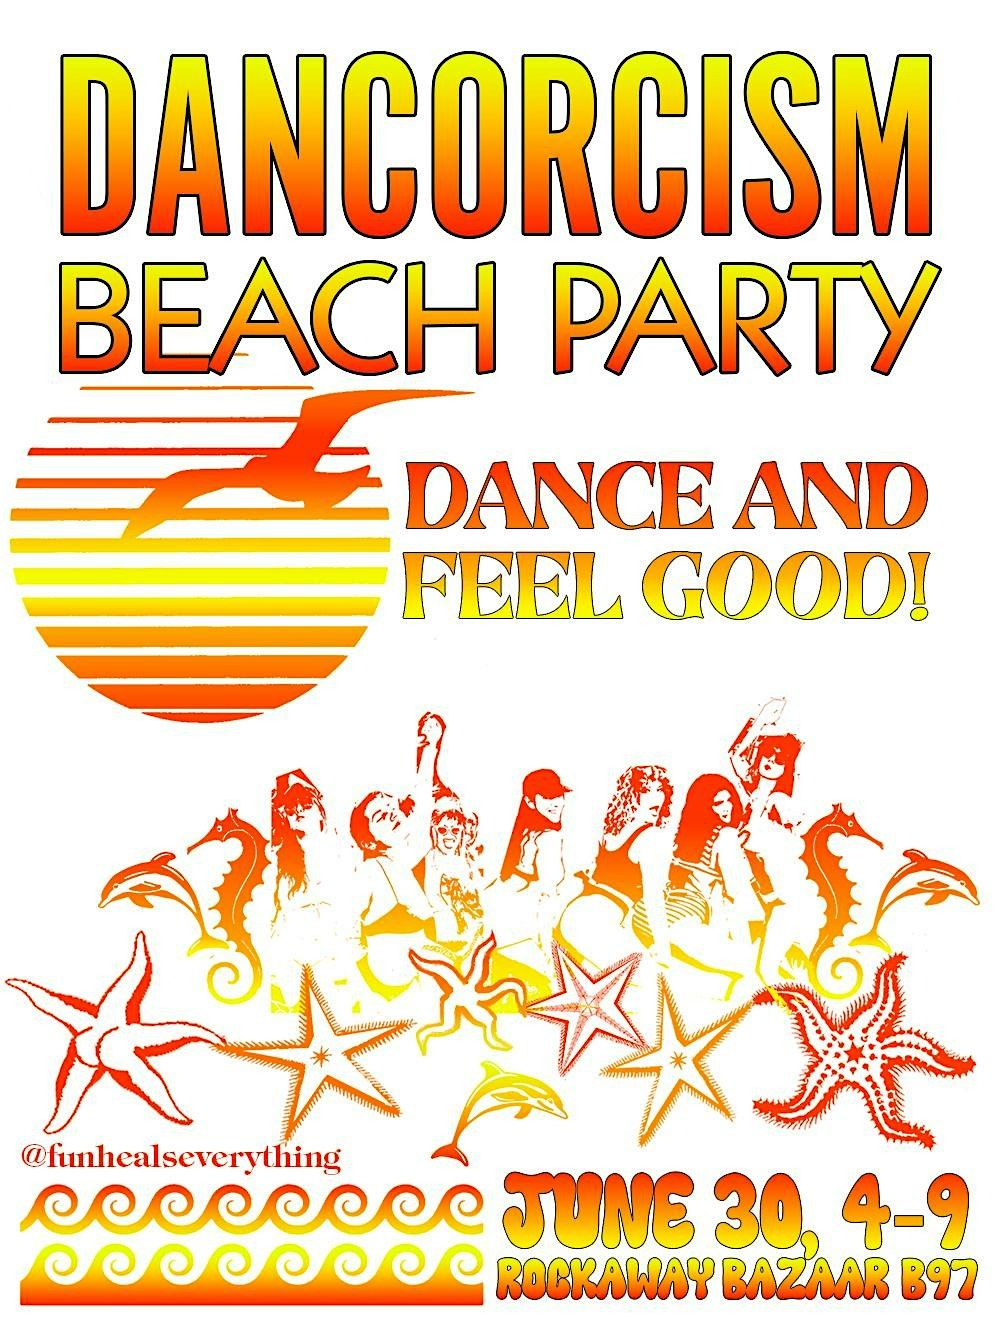 Dancorcism Beach Party